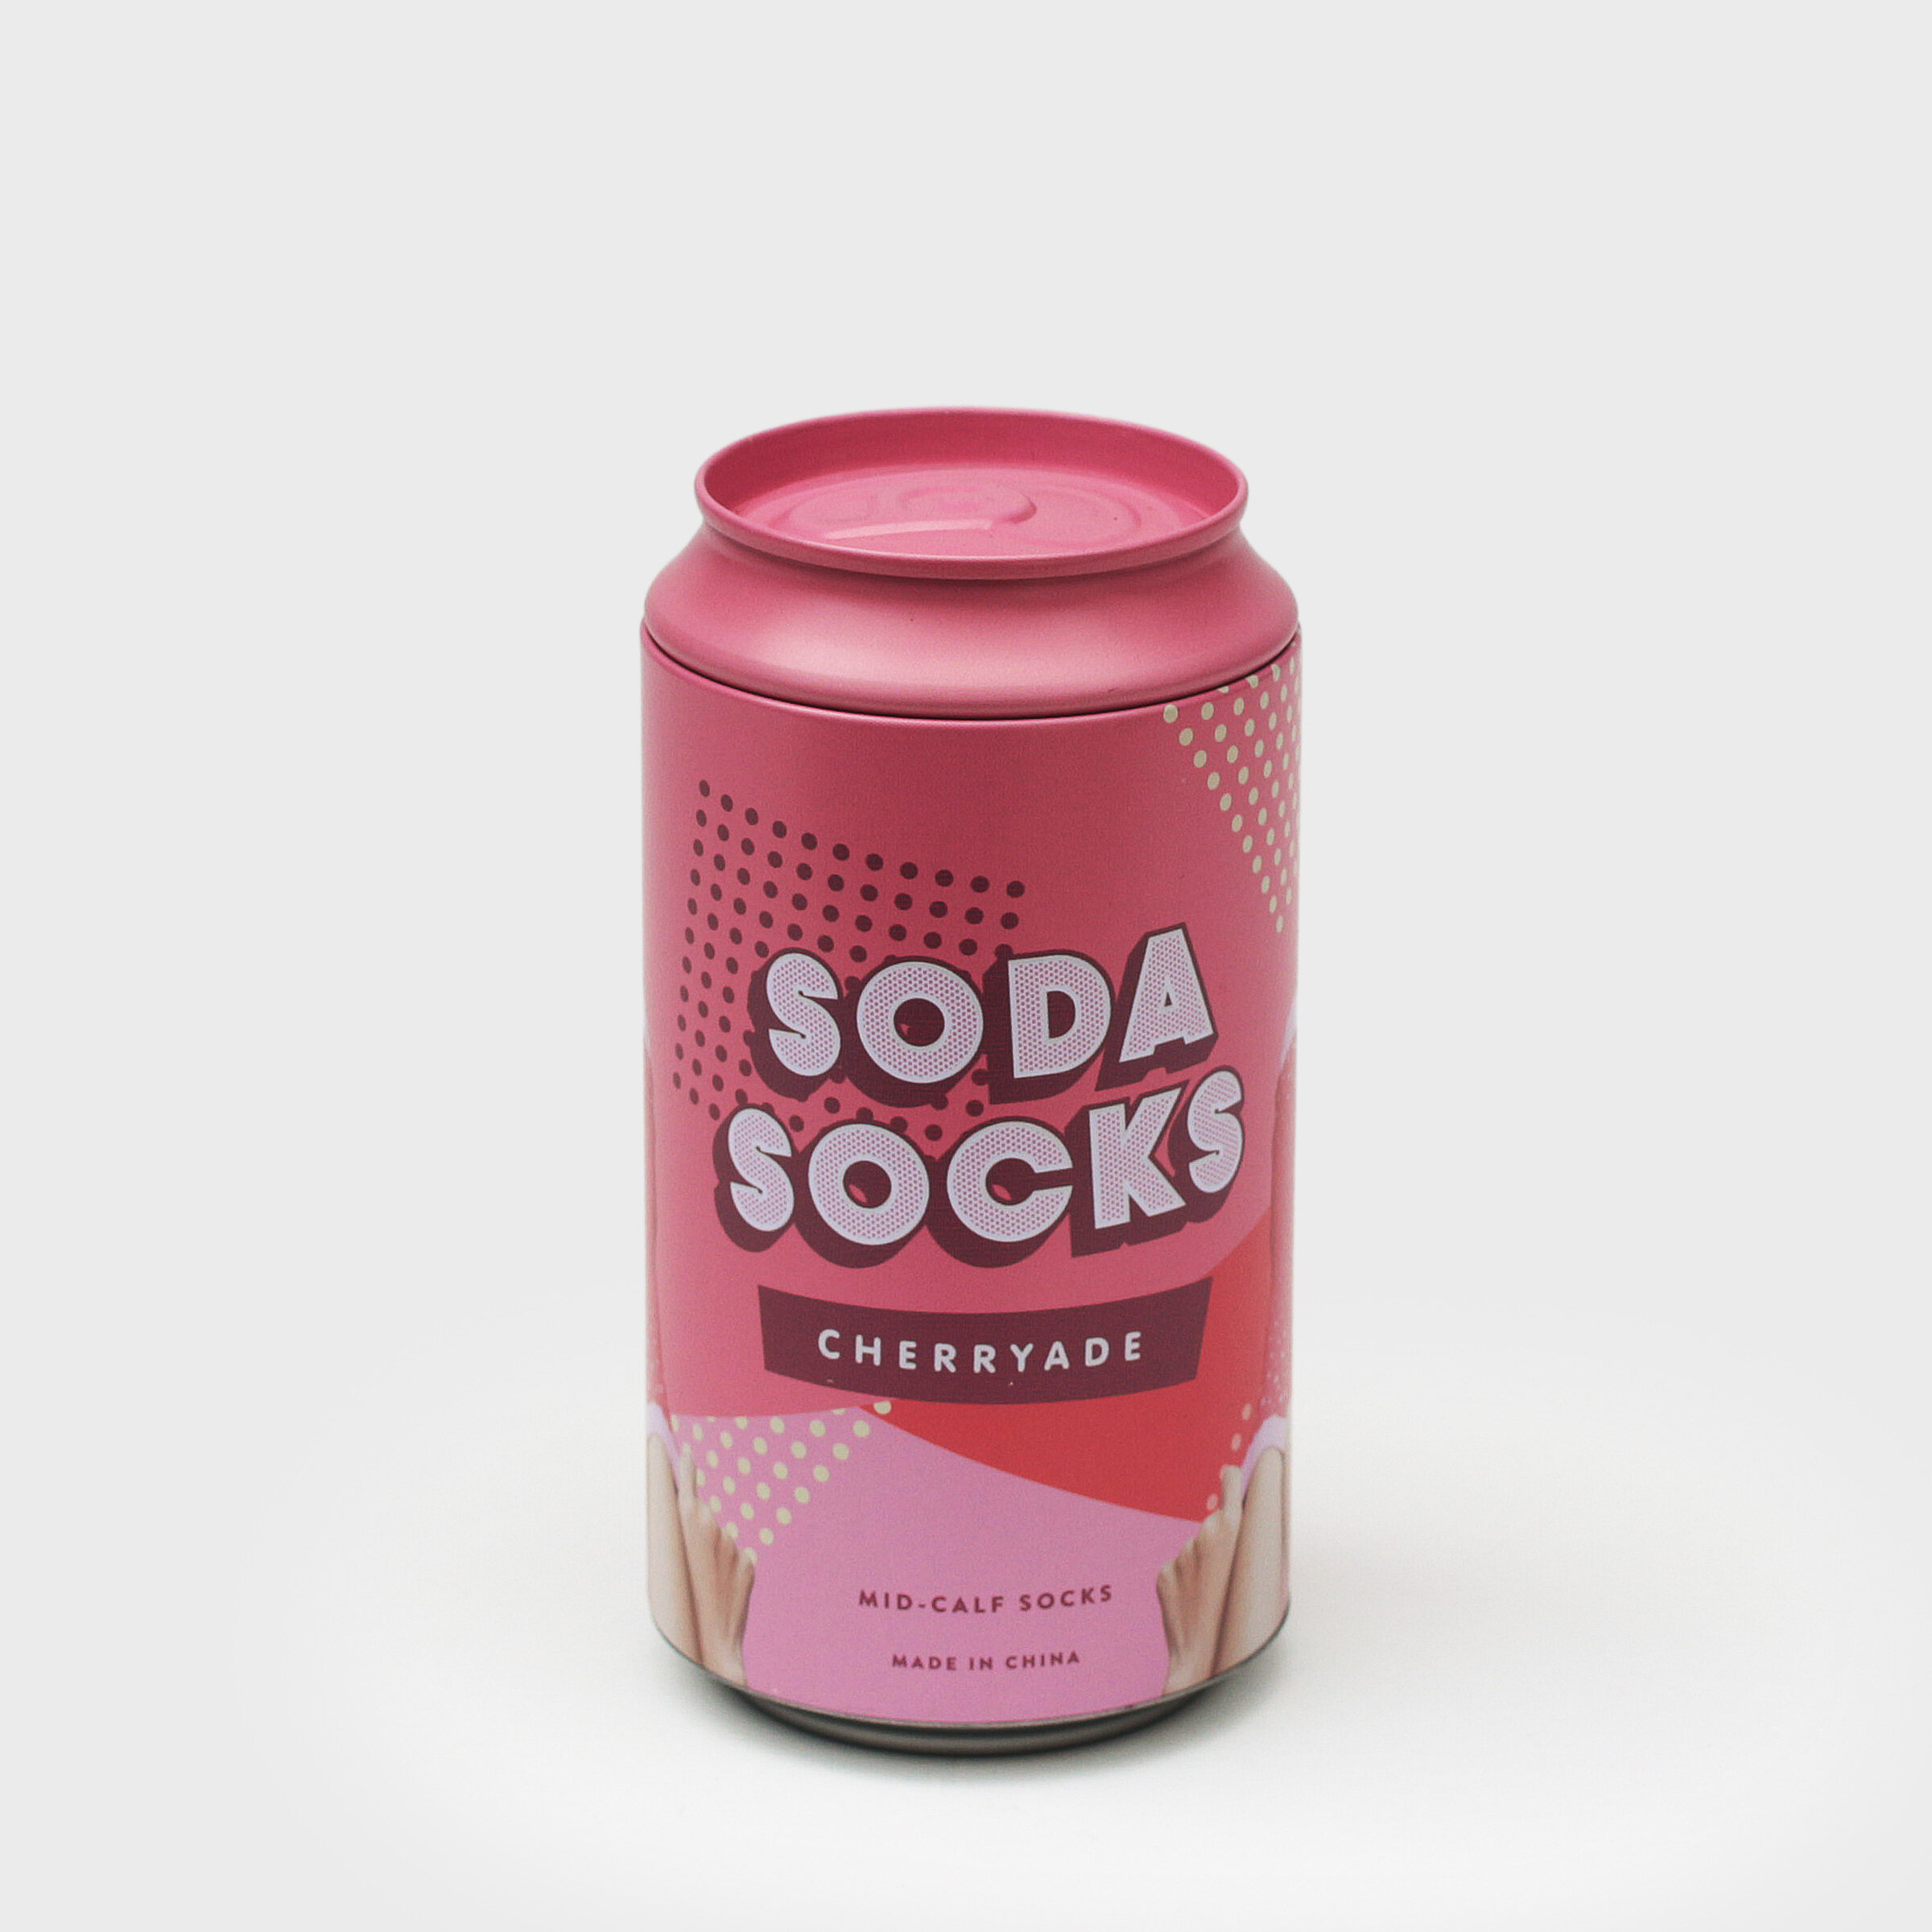 Cherry Soda Socks in a can